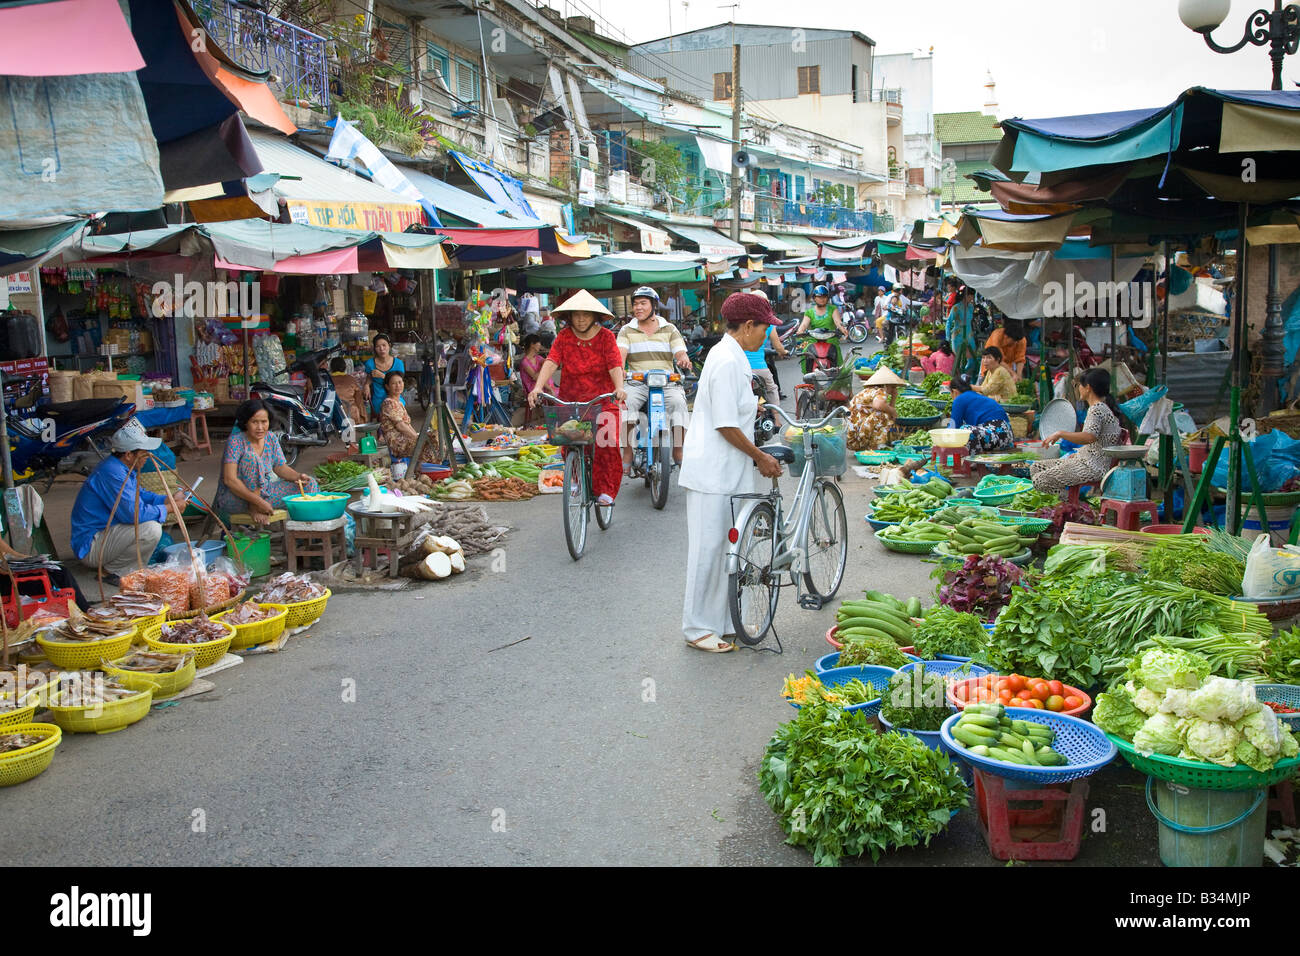 A market scene in south Vietnam Stock Photo